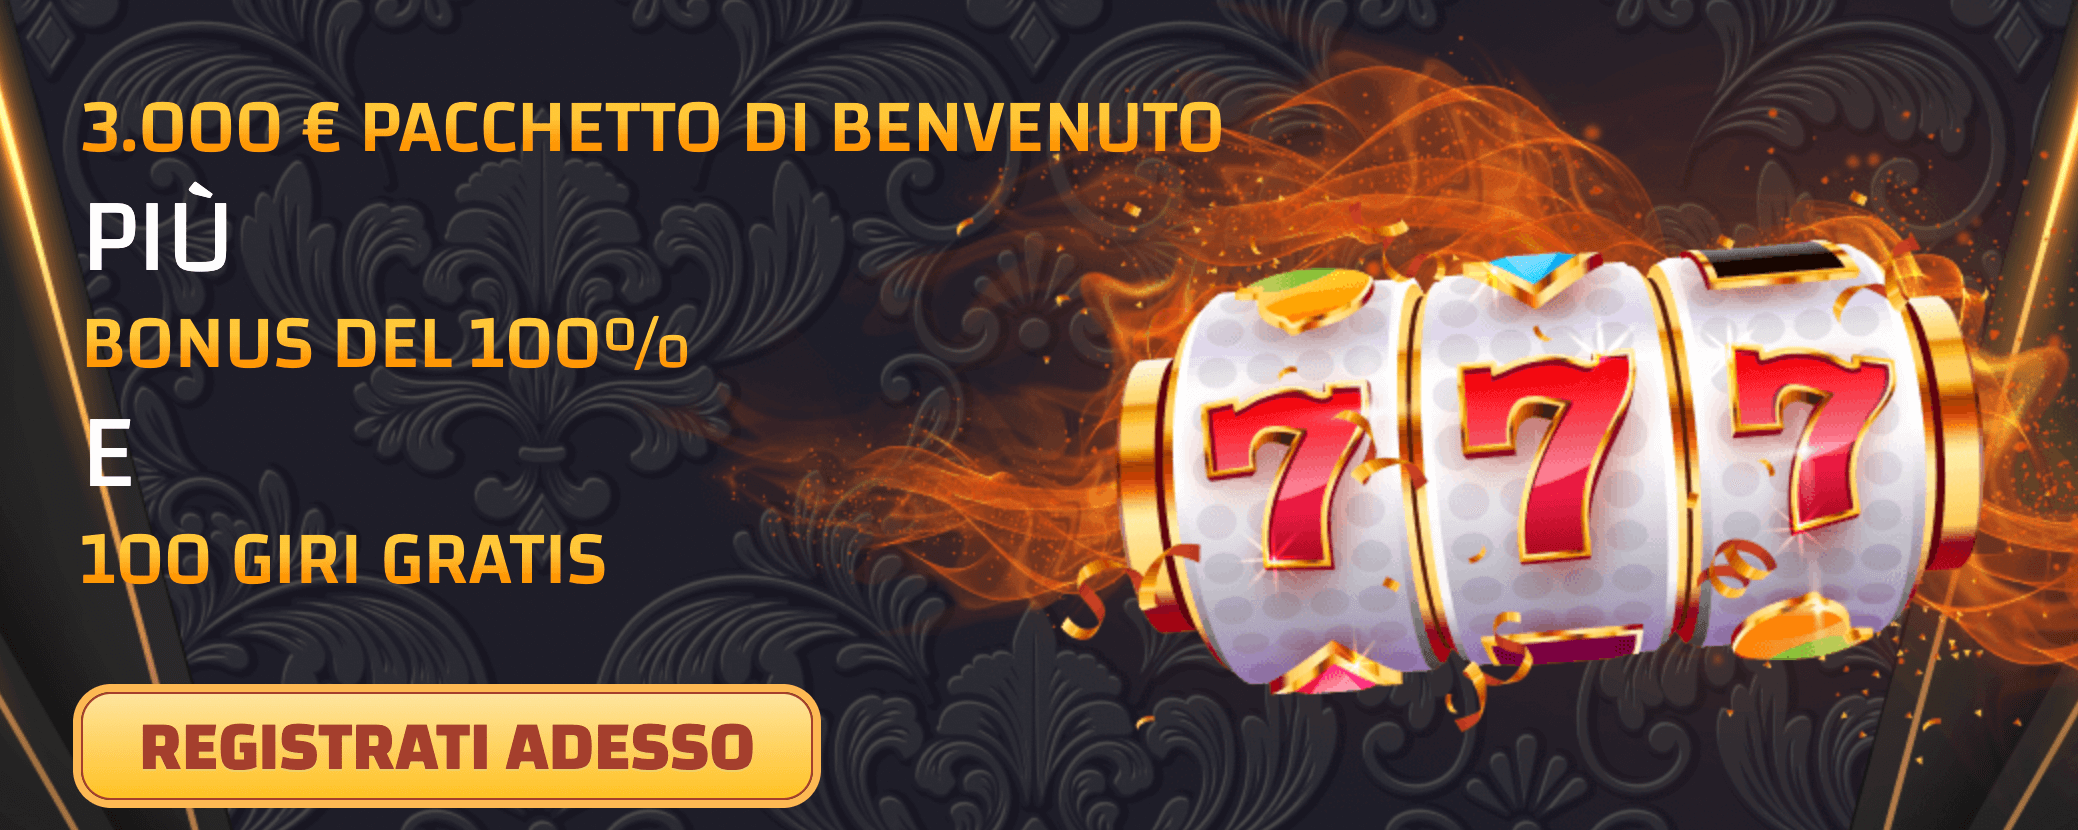 Playregal Casino Bonus Benvenuto